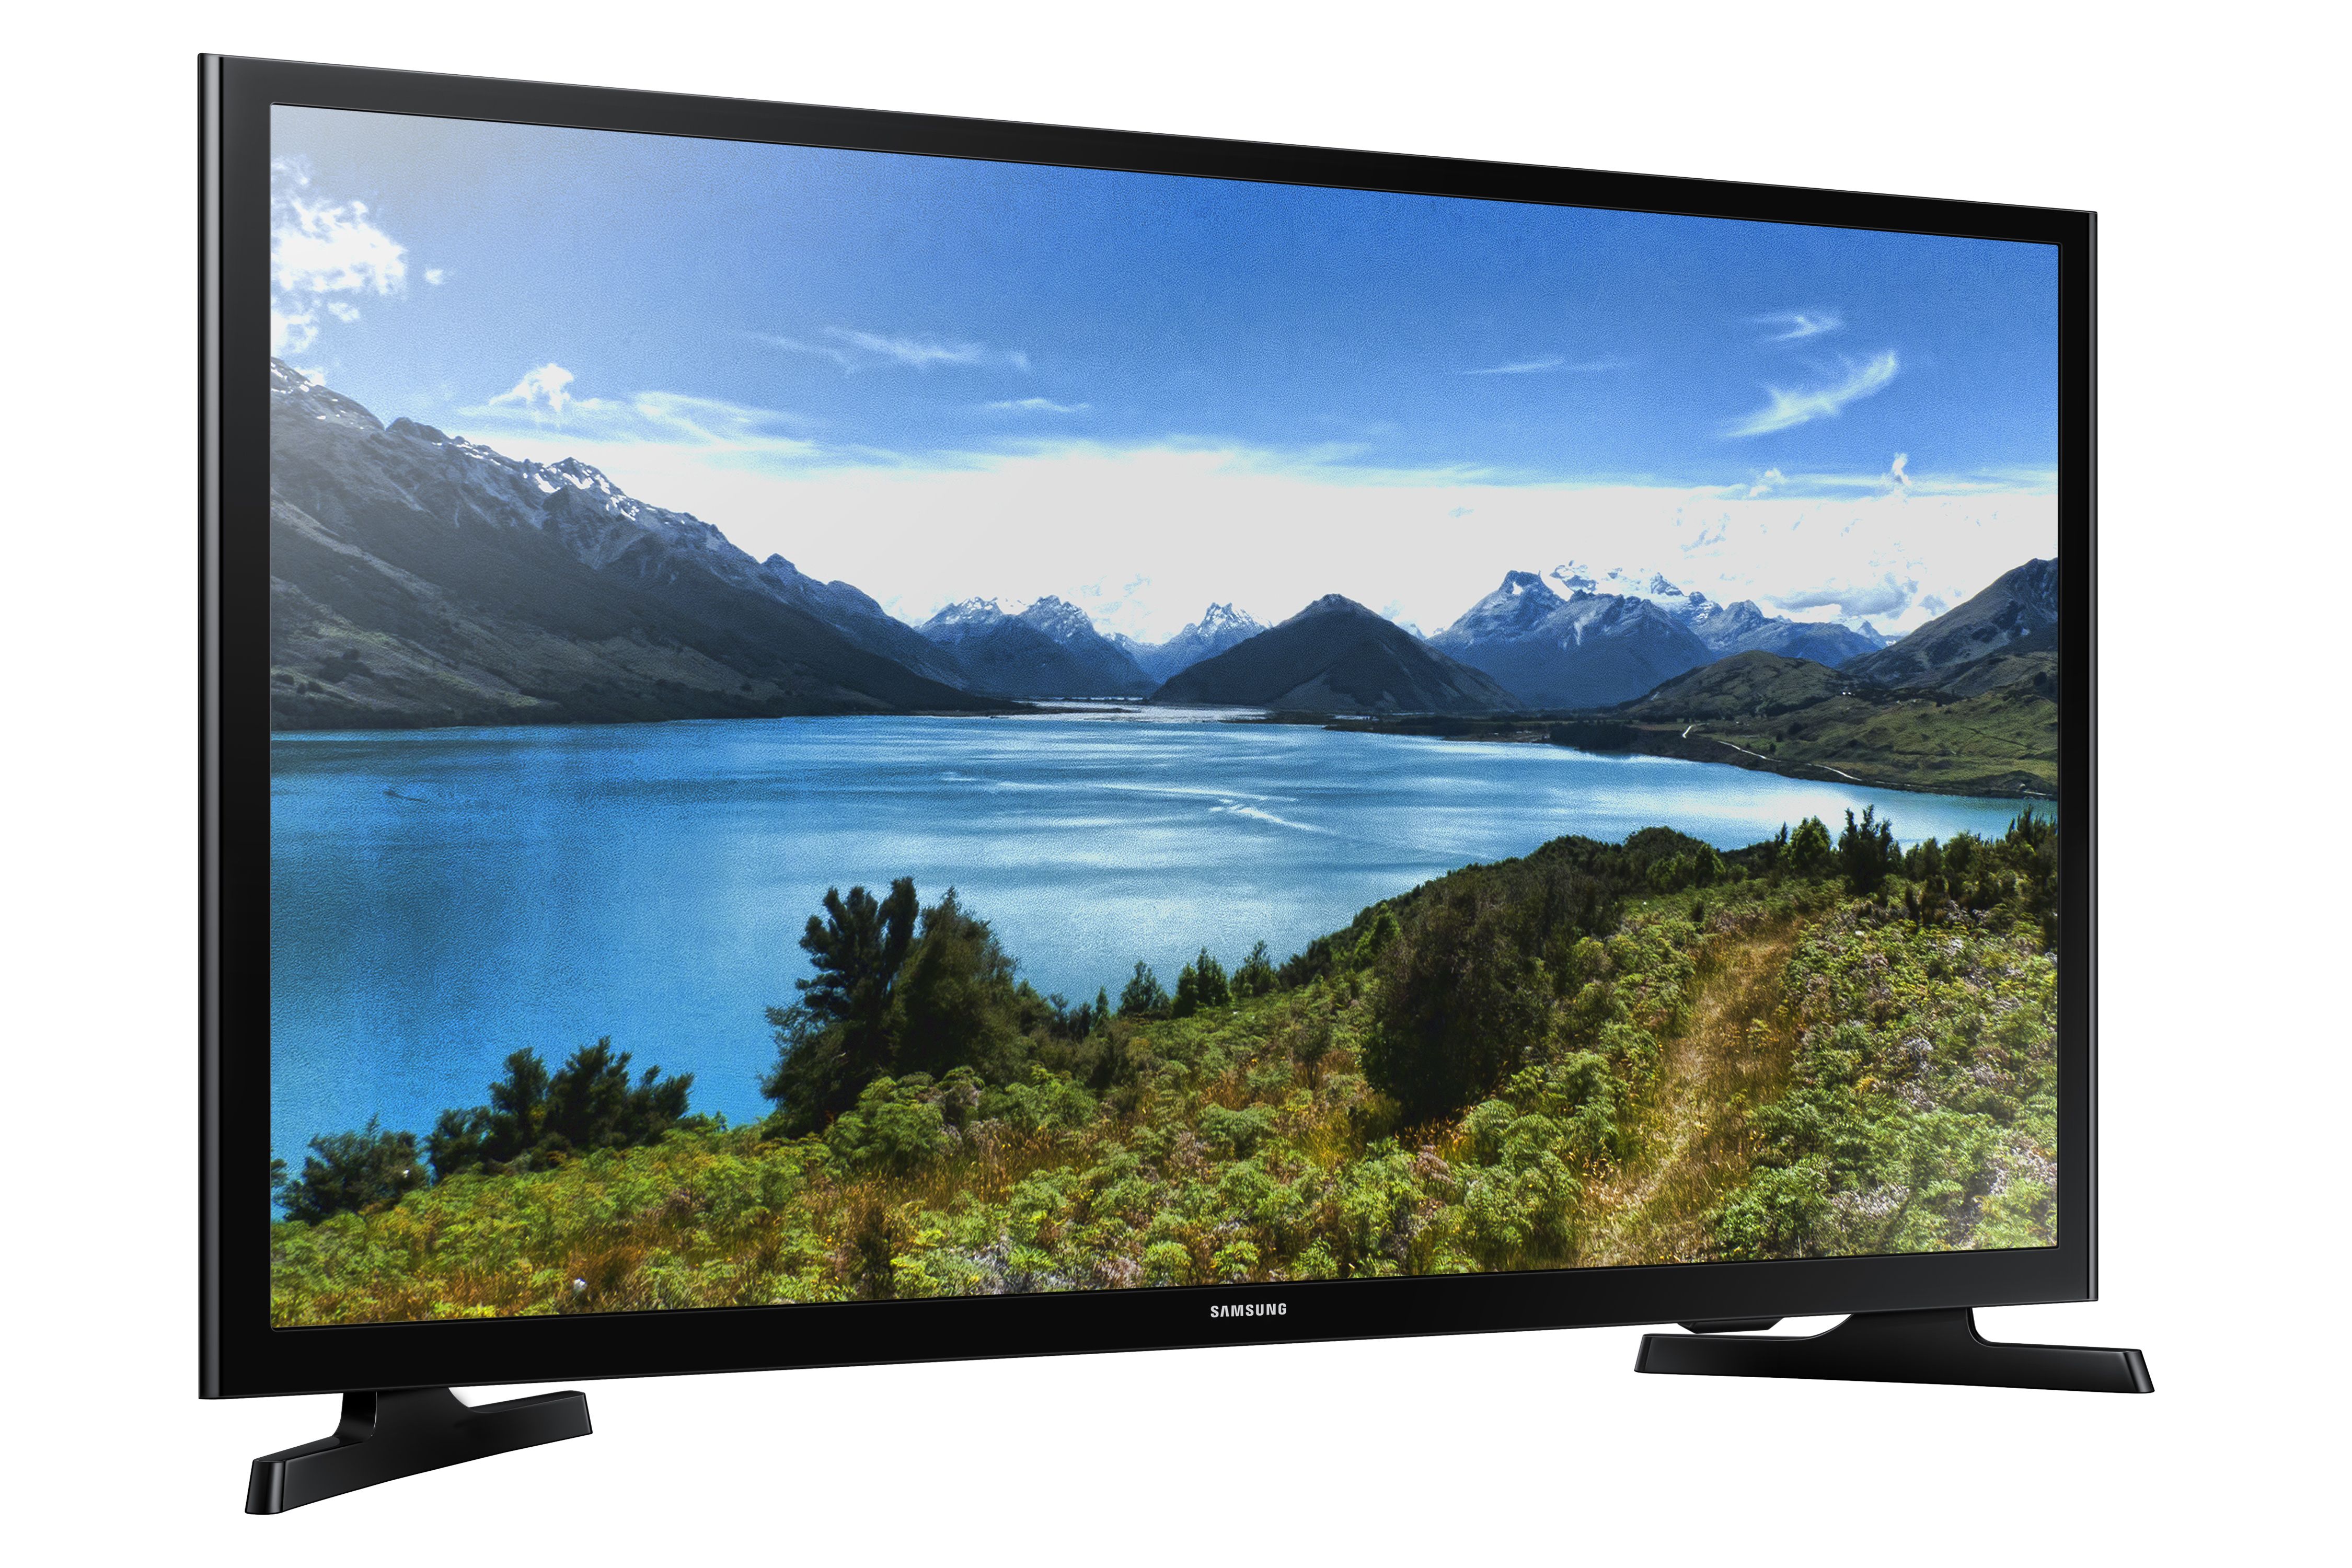 SAMSUNG 32" Class HD (720P) LED TV UN32J4000 - image 4 of 9